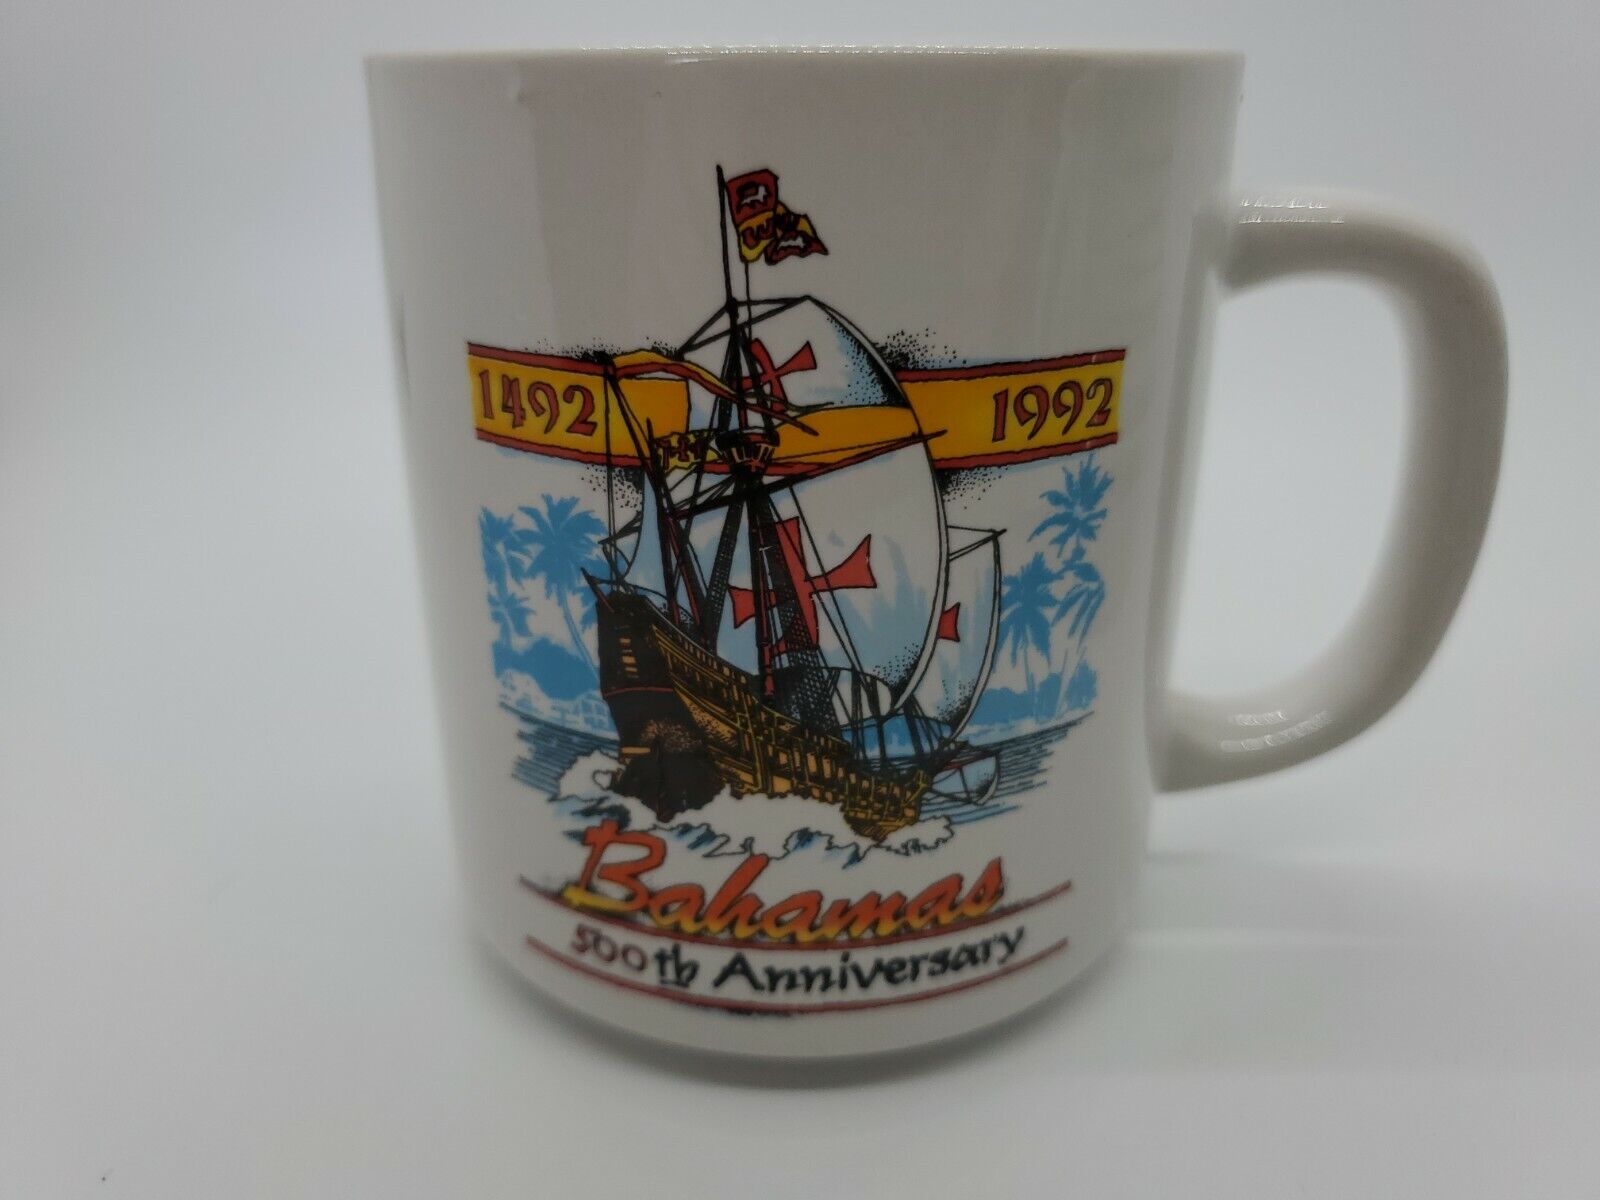 Vintage Bahamas Coffee Cup Mug 500th Anniversary 1492-1992